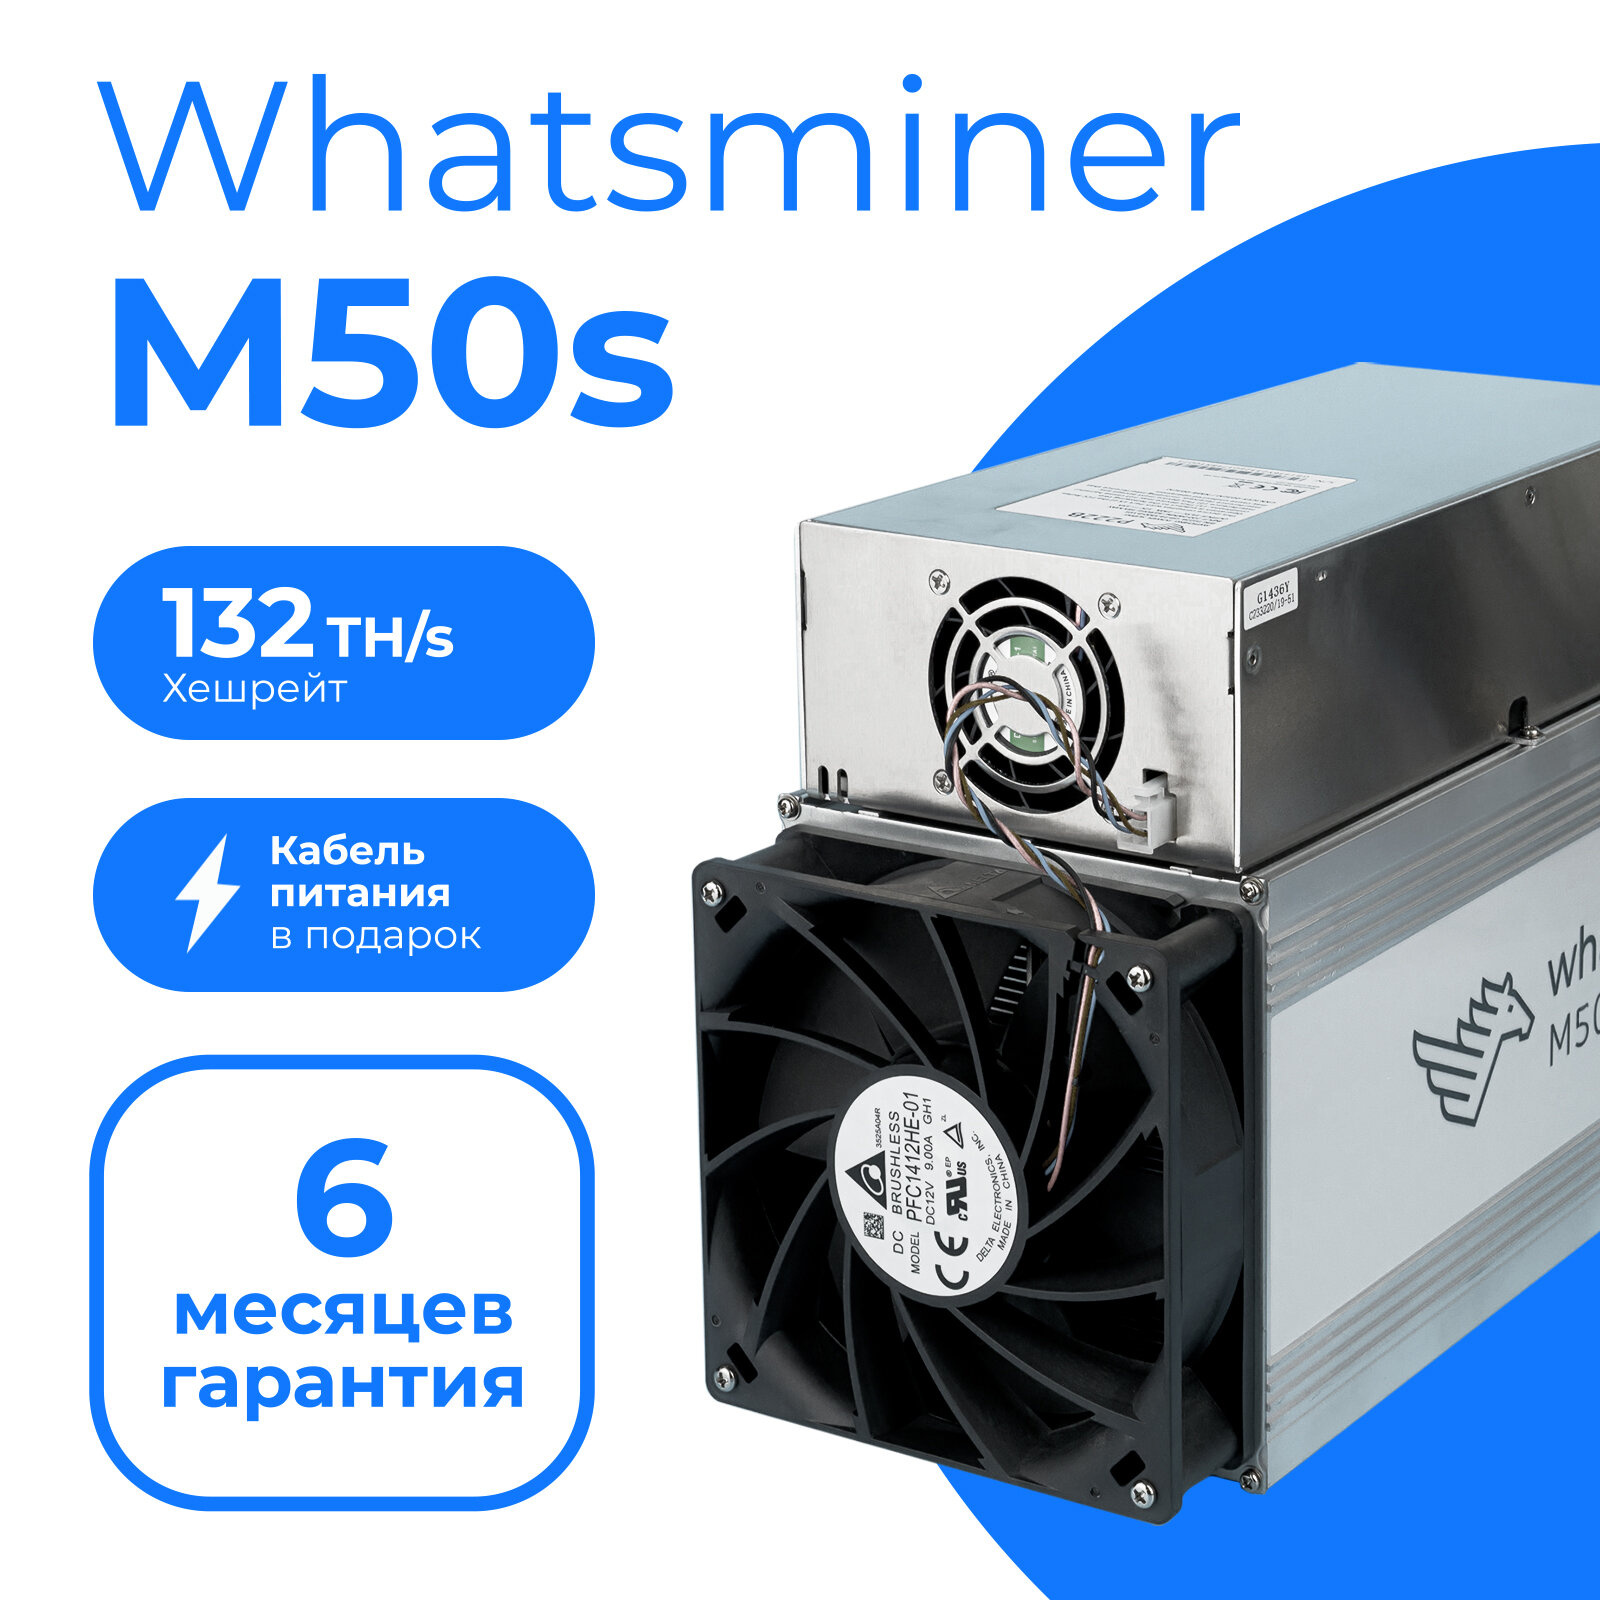 ASIC майнер Whatsminer M50S 132TH/s (26W) + кабель C19 3x1.5 в комплекте